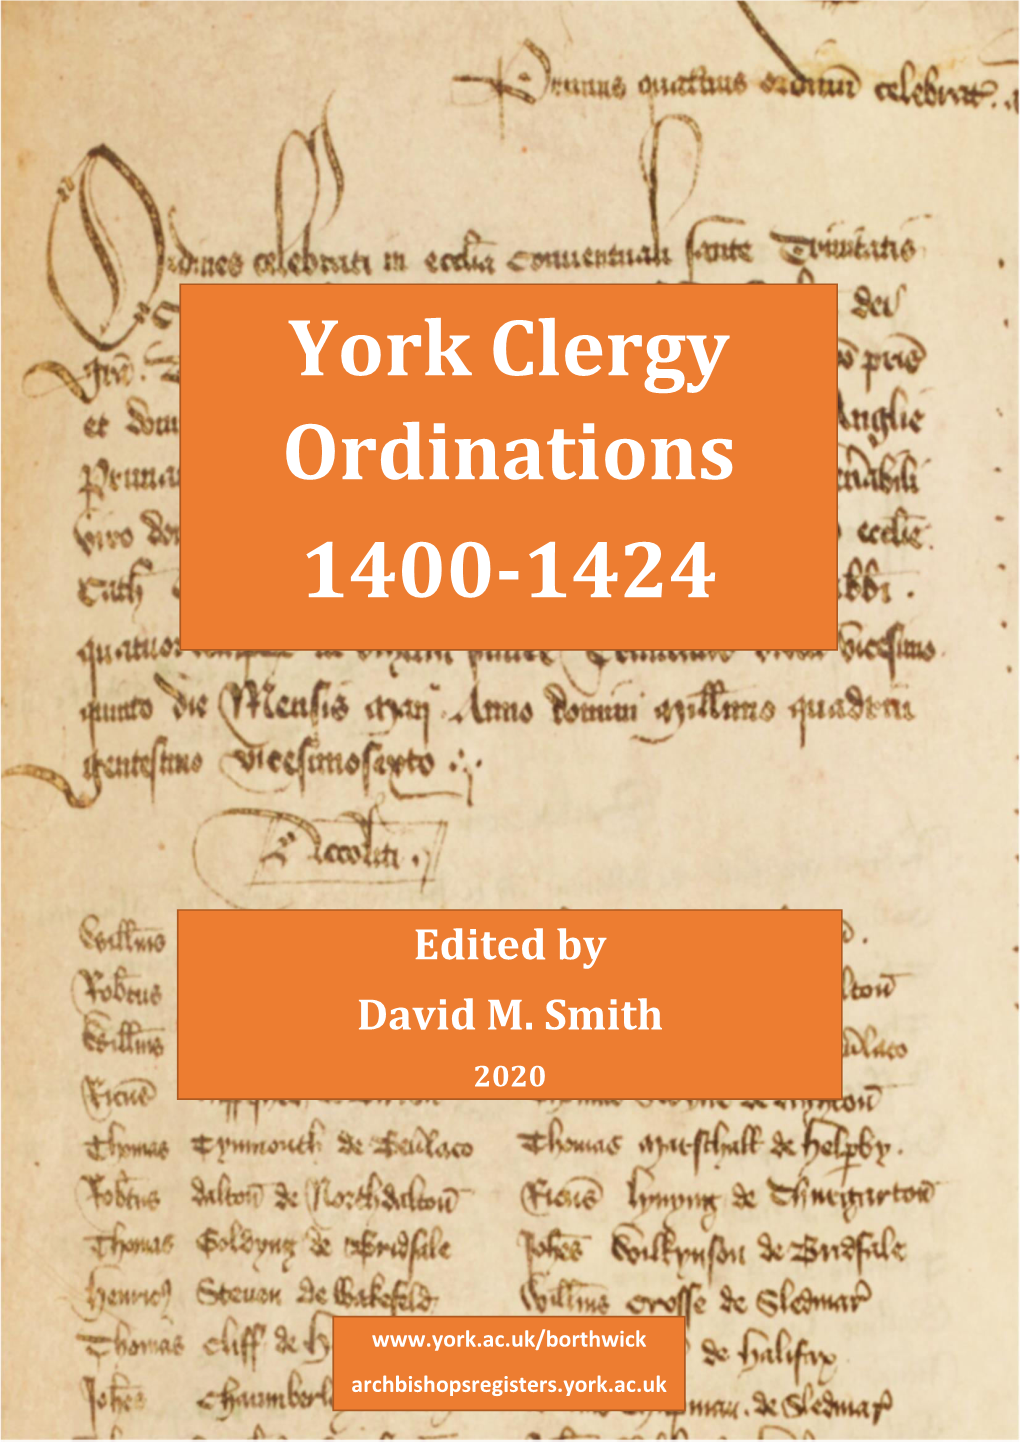 York Clergy Ordinations 1400-1424